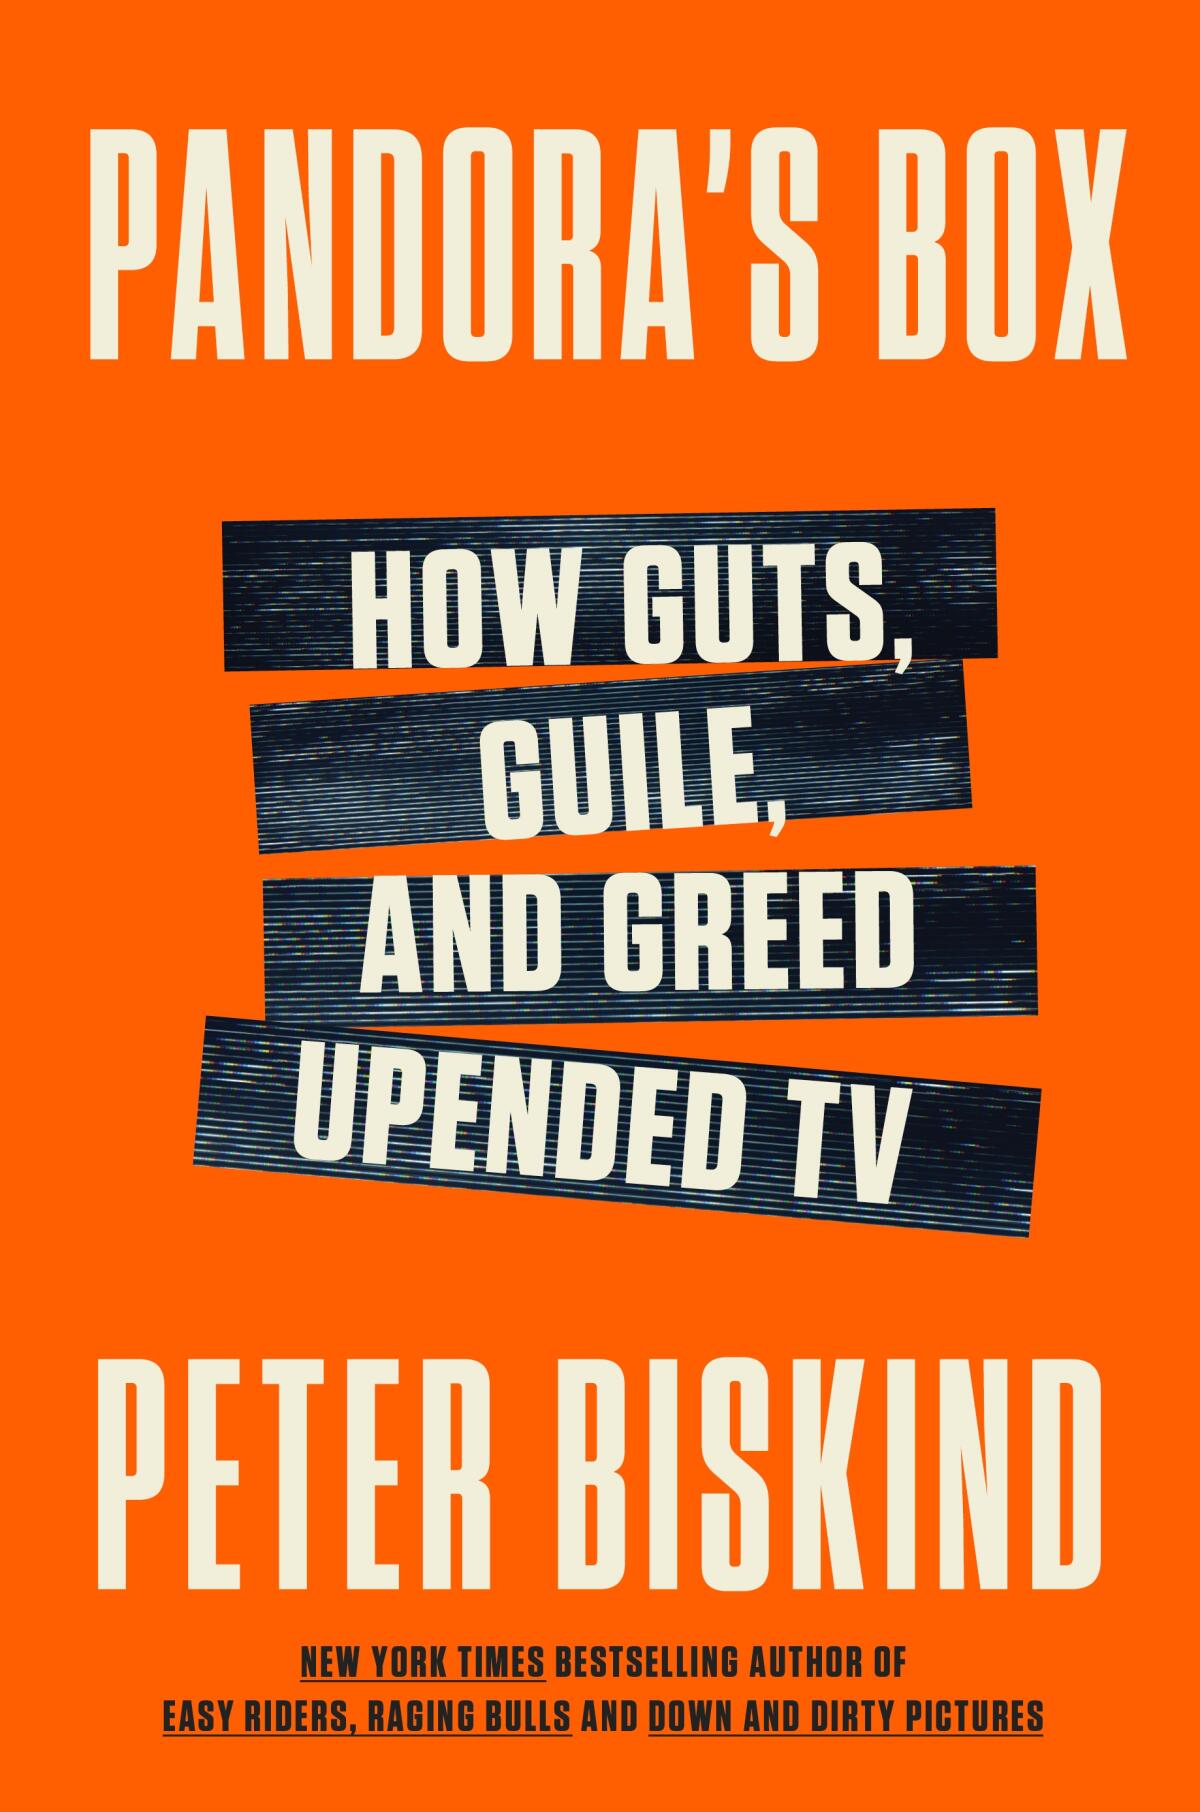 "Pandora's Box," by Peter Biskind